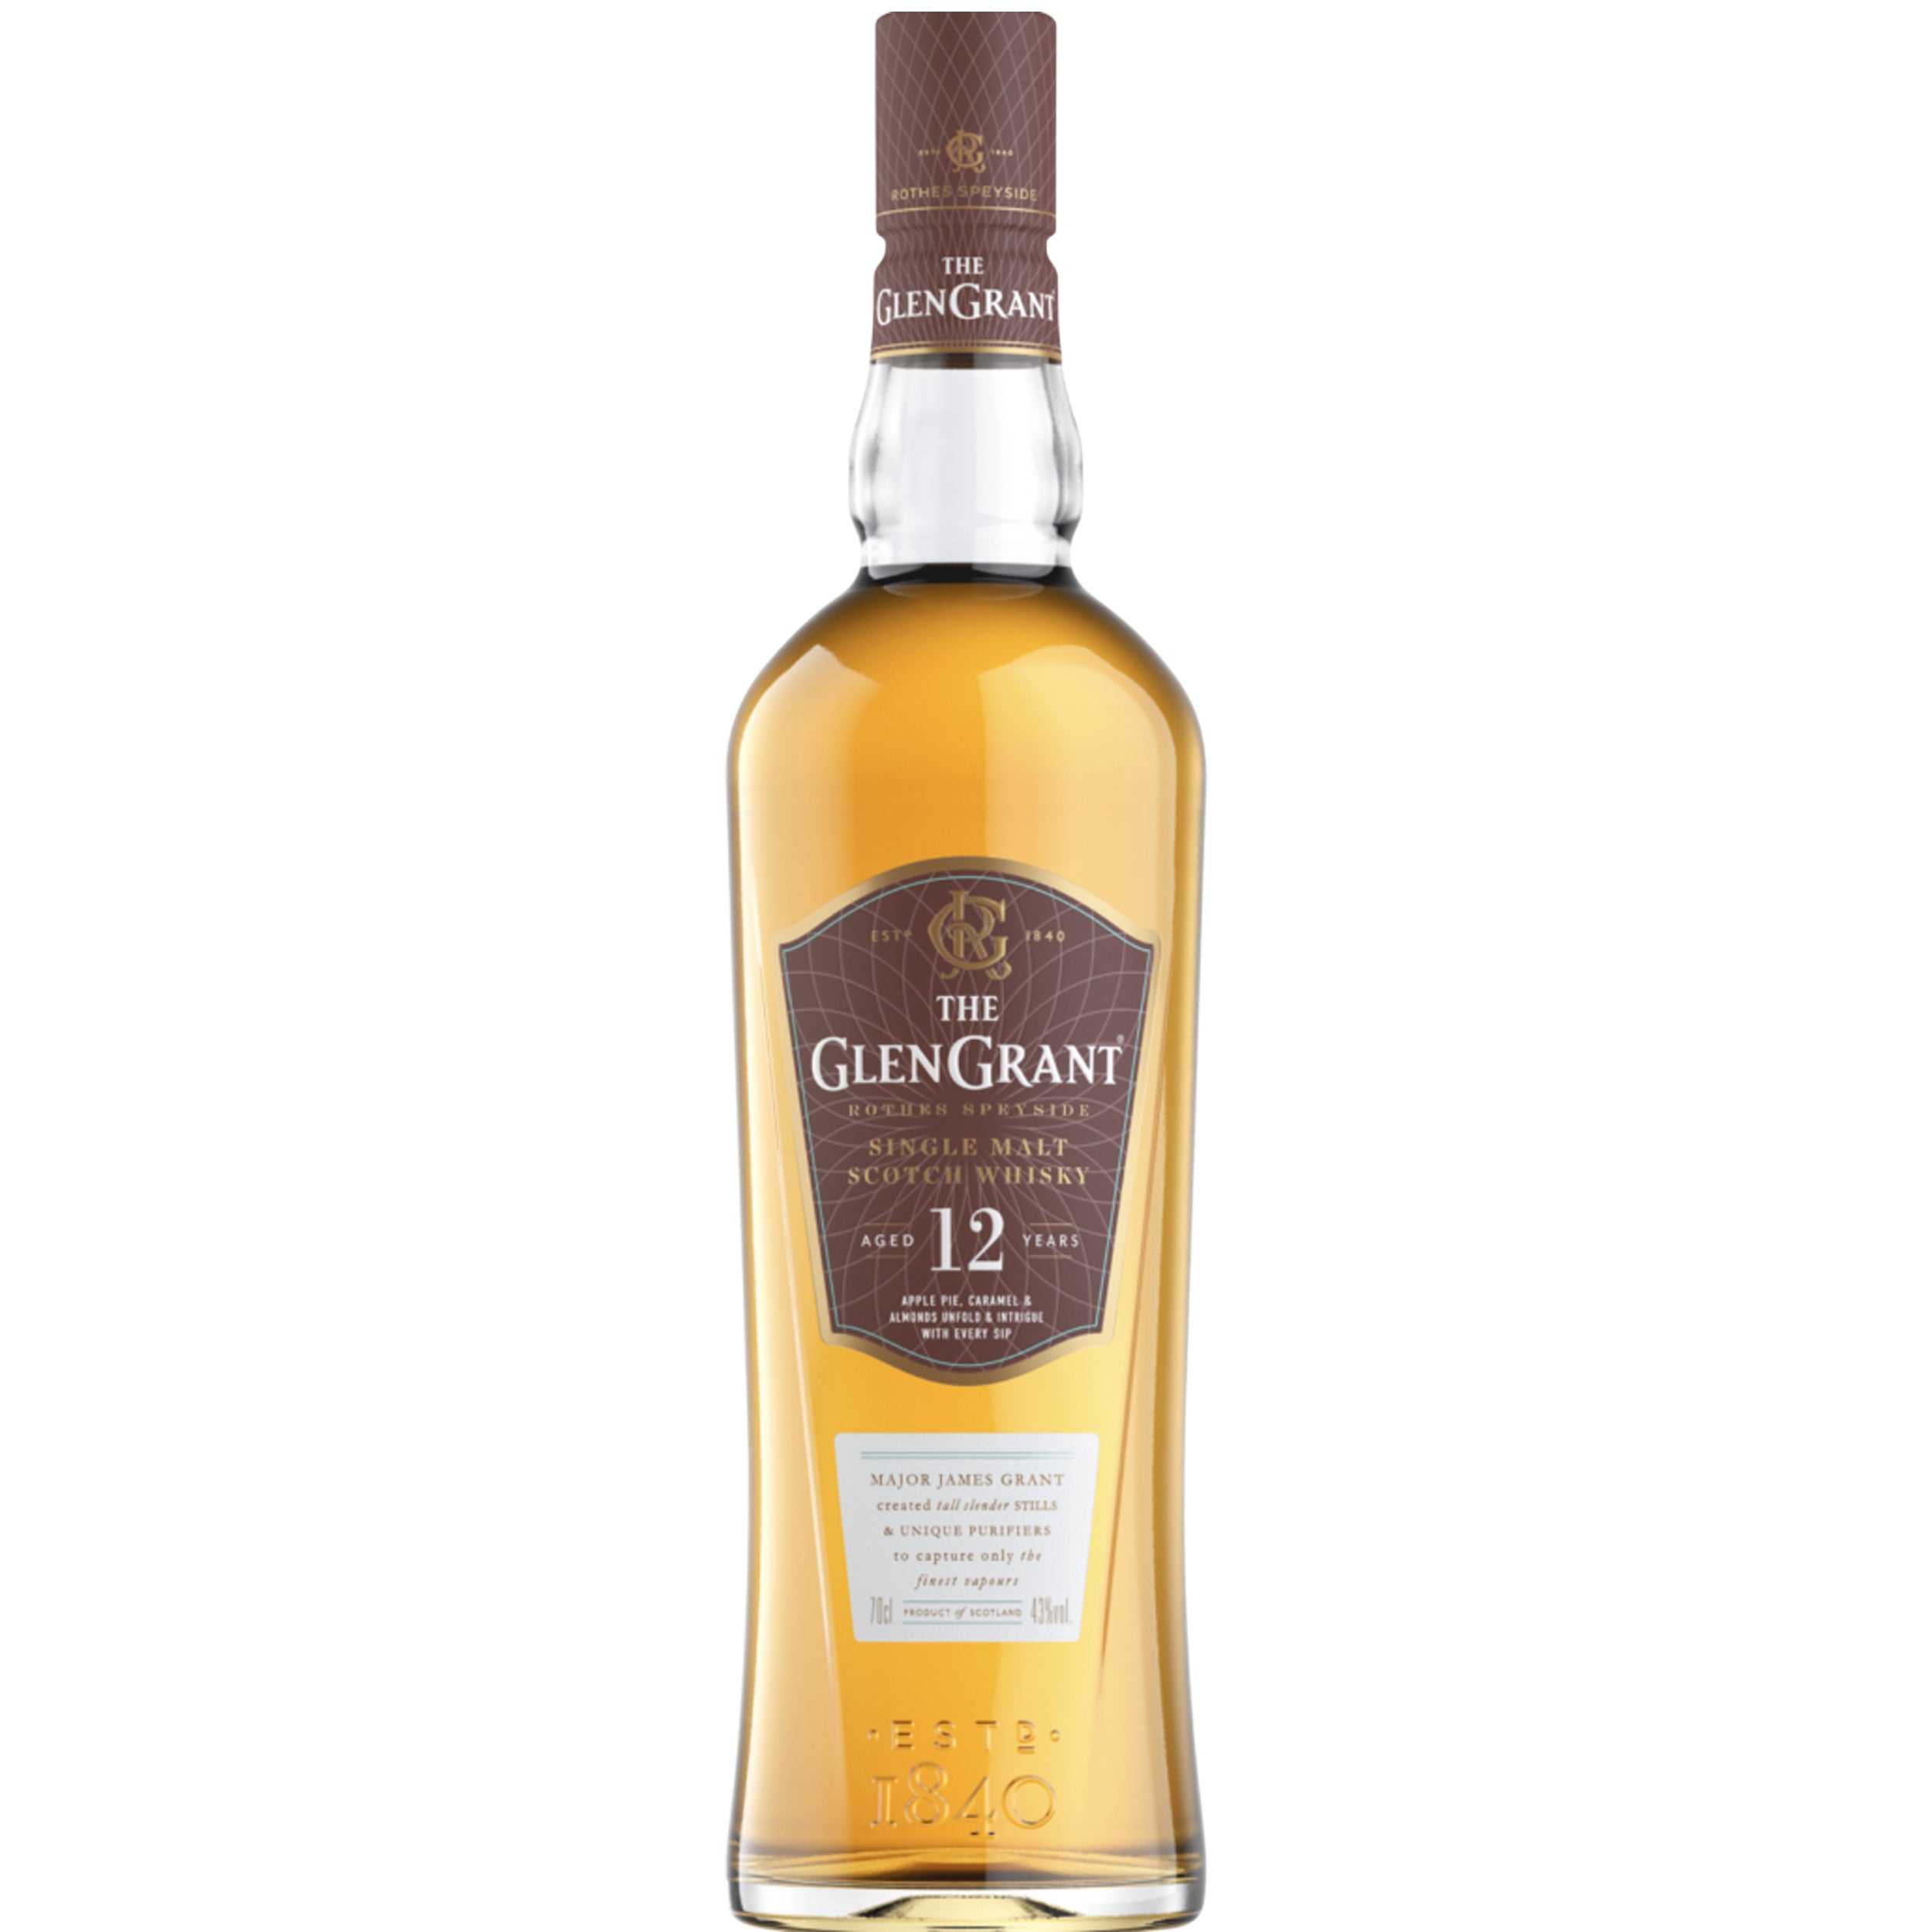 The Glen Grant 12yr Scotch Whisky